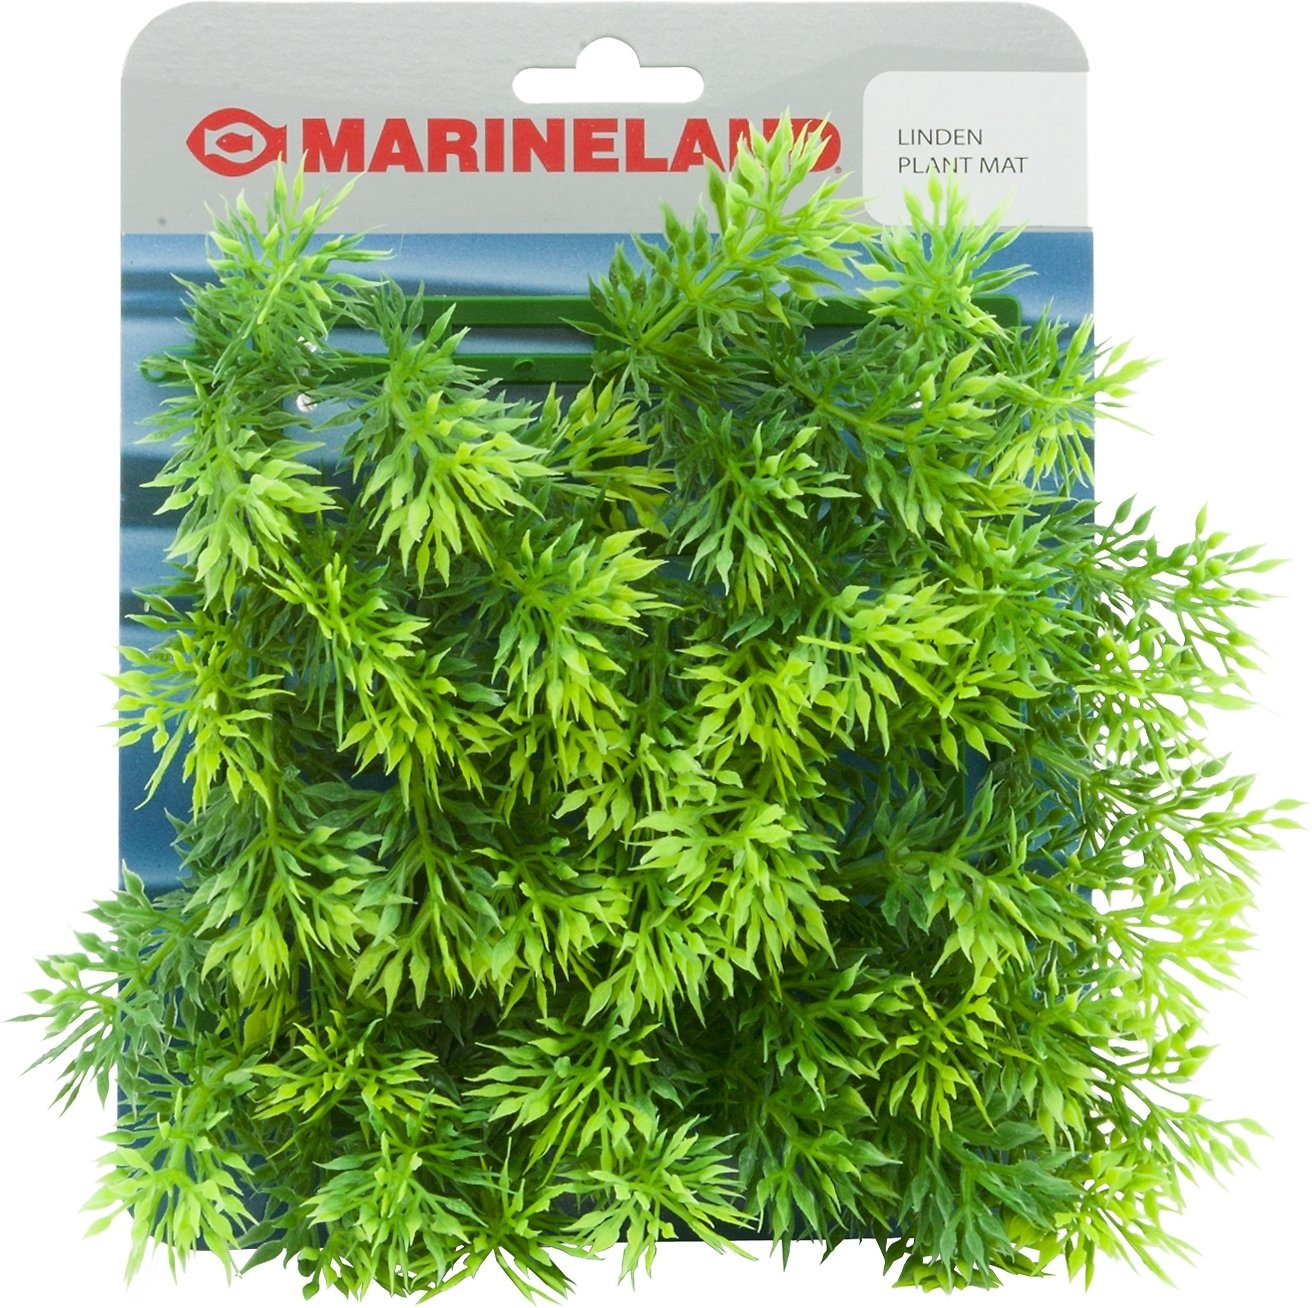 Marineland Linden Plant Mat